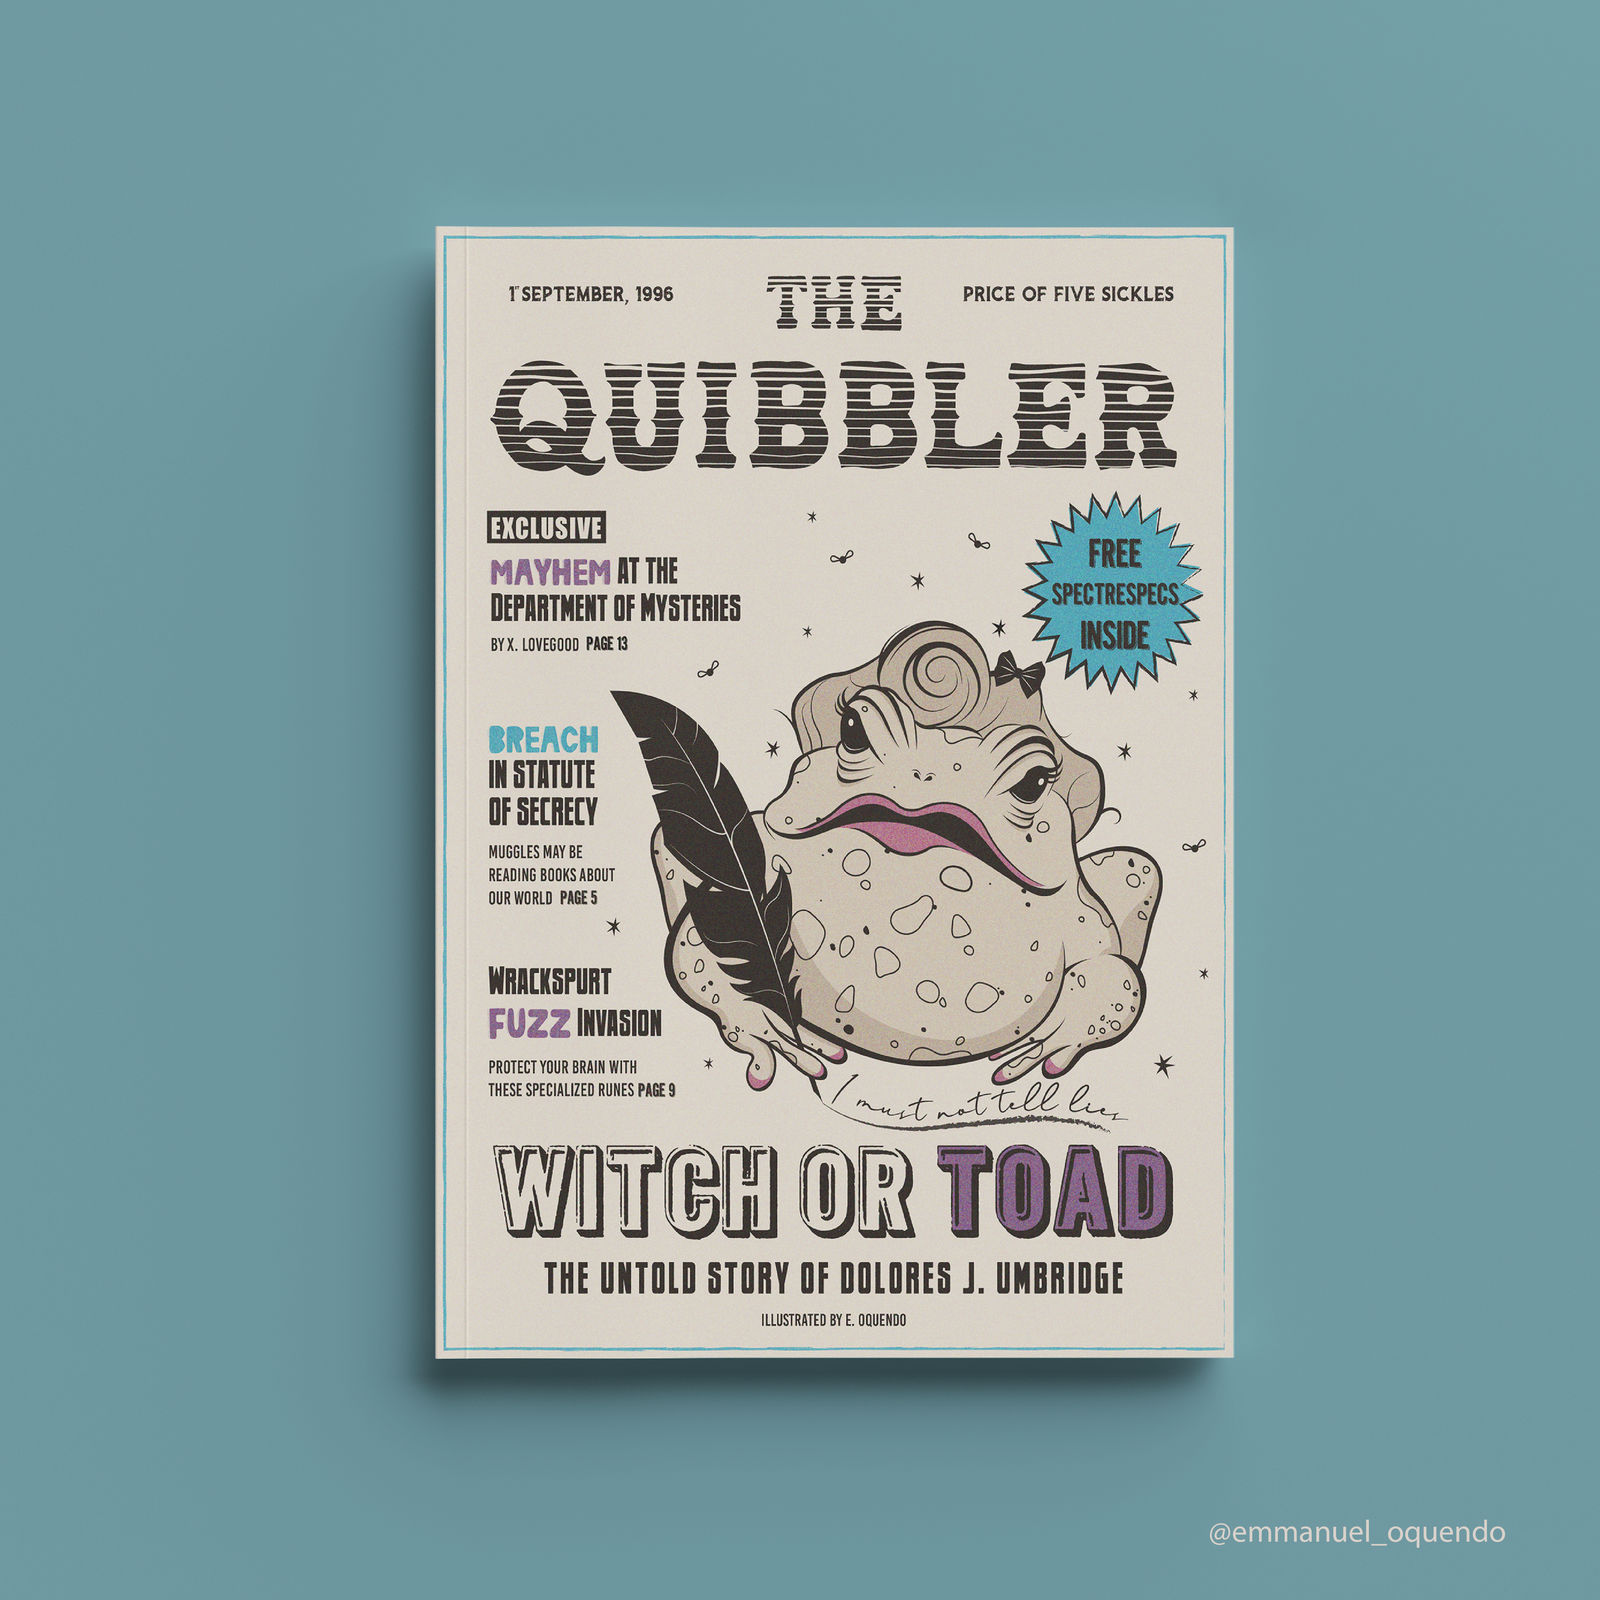 the_quibbler_by_emmanuel_oquendo_de5yezr-fullview